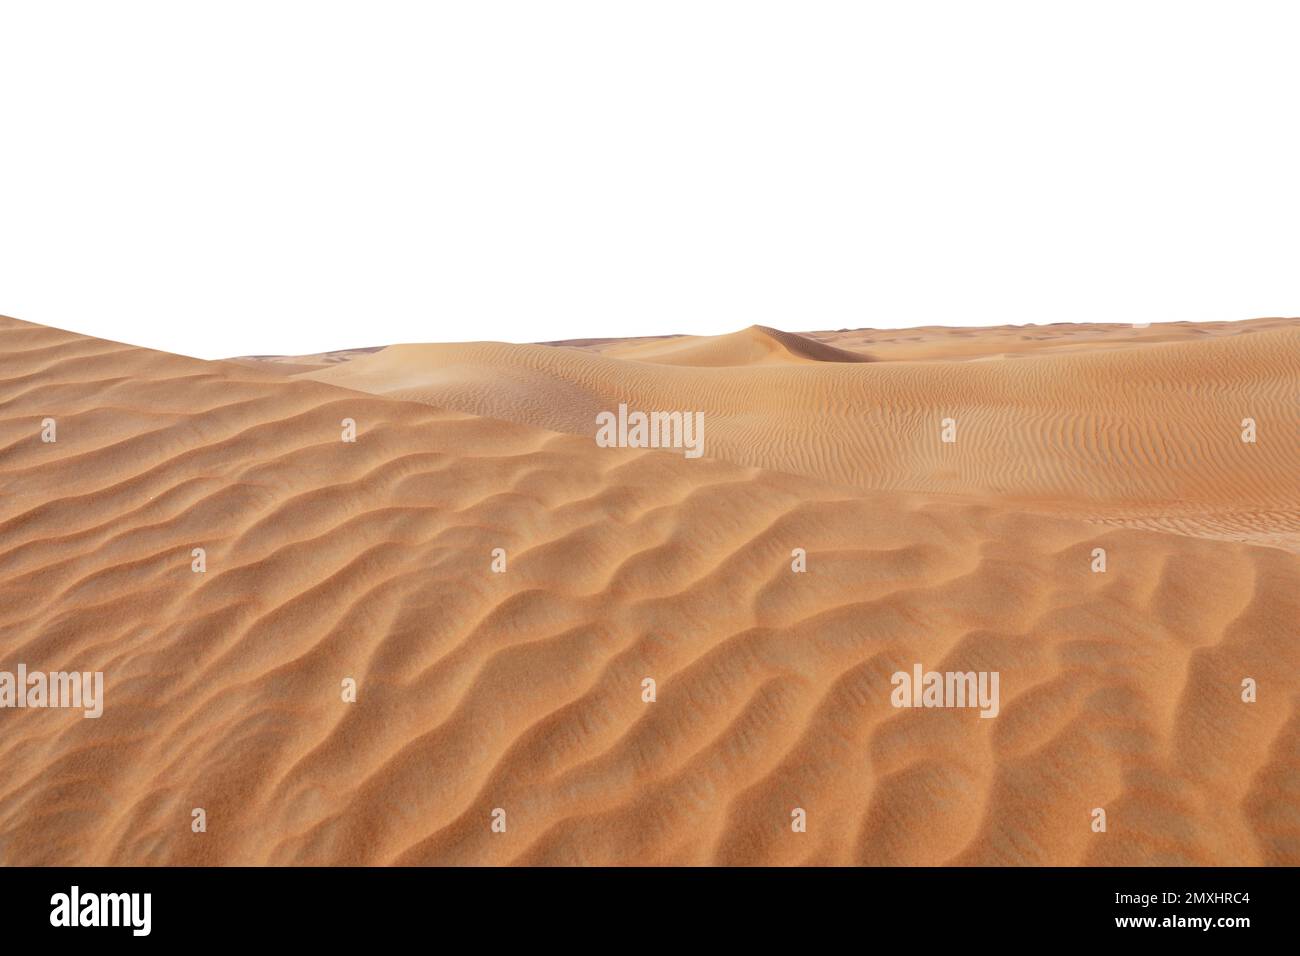 Grande duna di sabbia calda su sfondo bianco Foto Stock